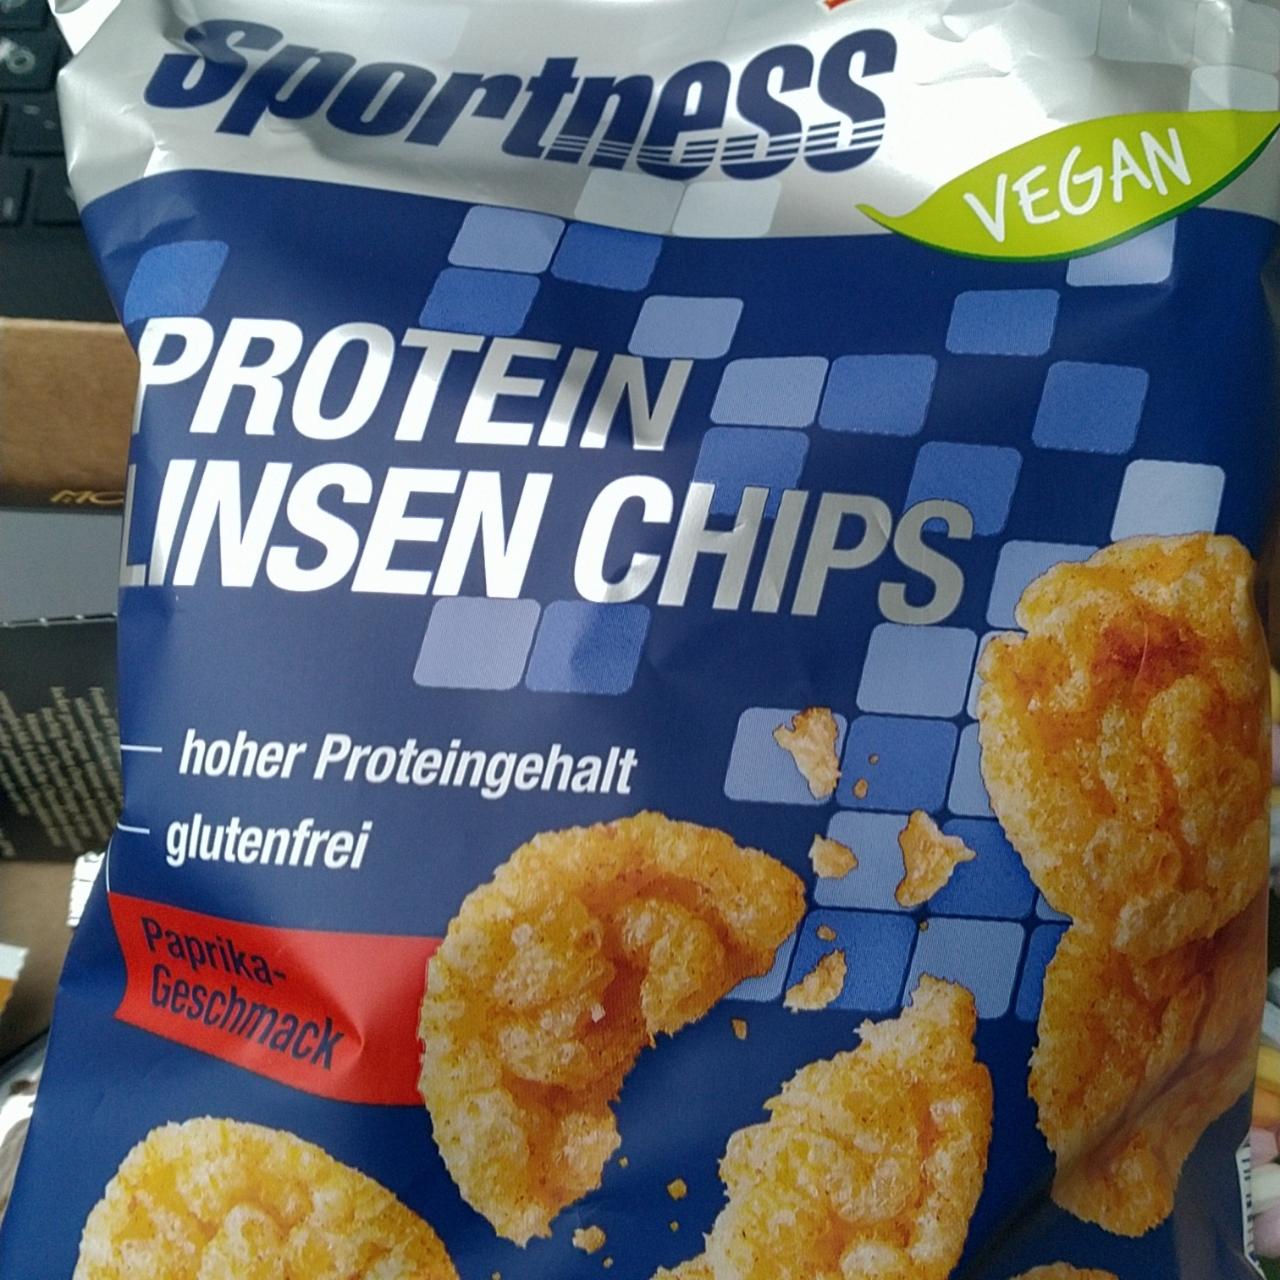 Képek - Protein linsen chips Paprika geschmack Sportness